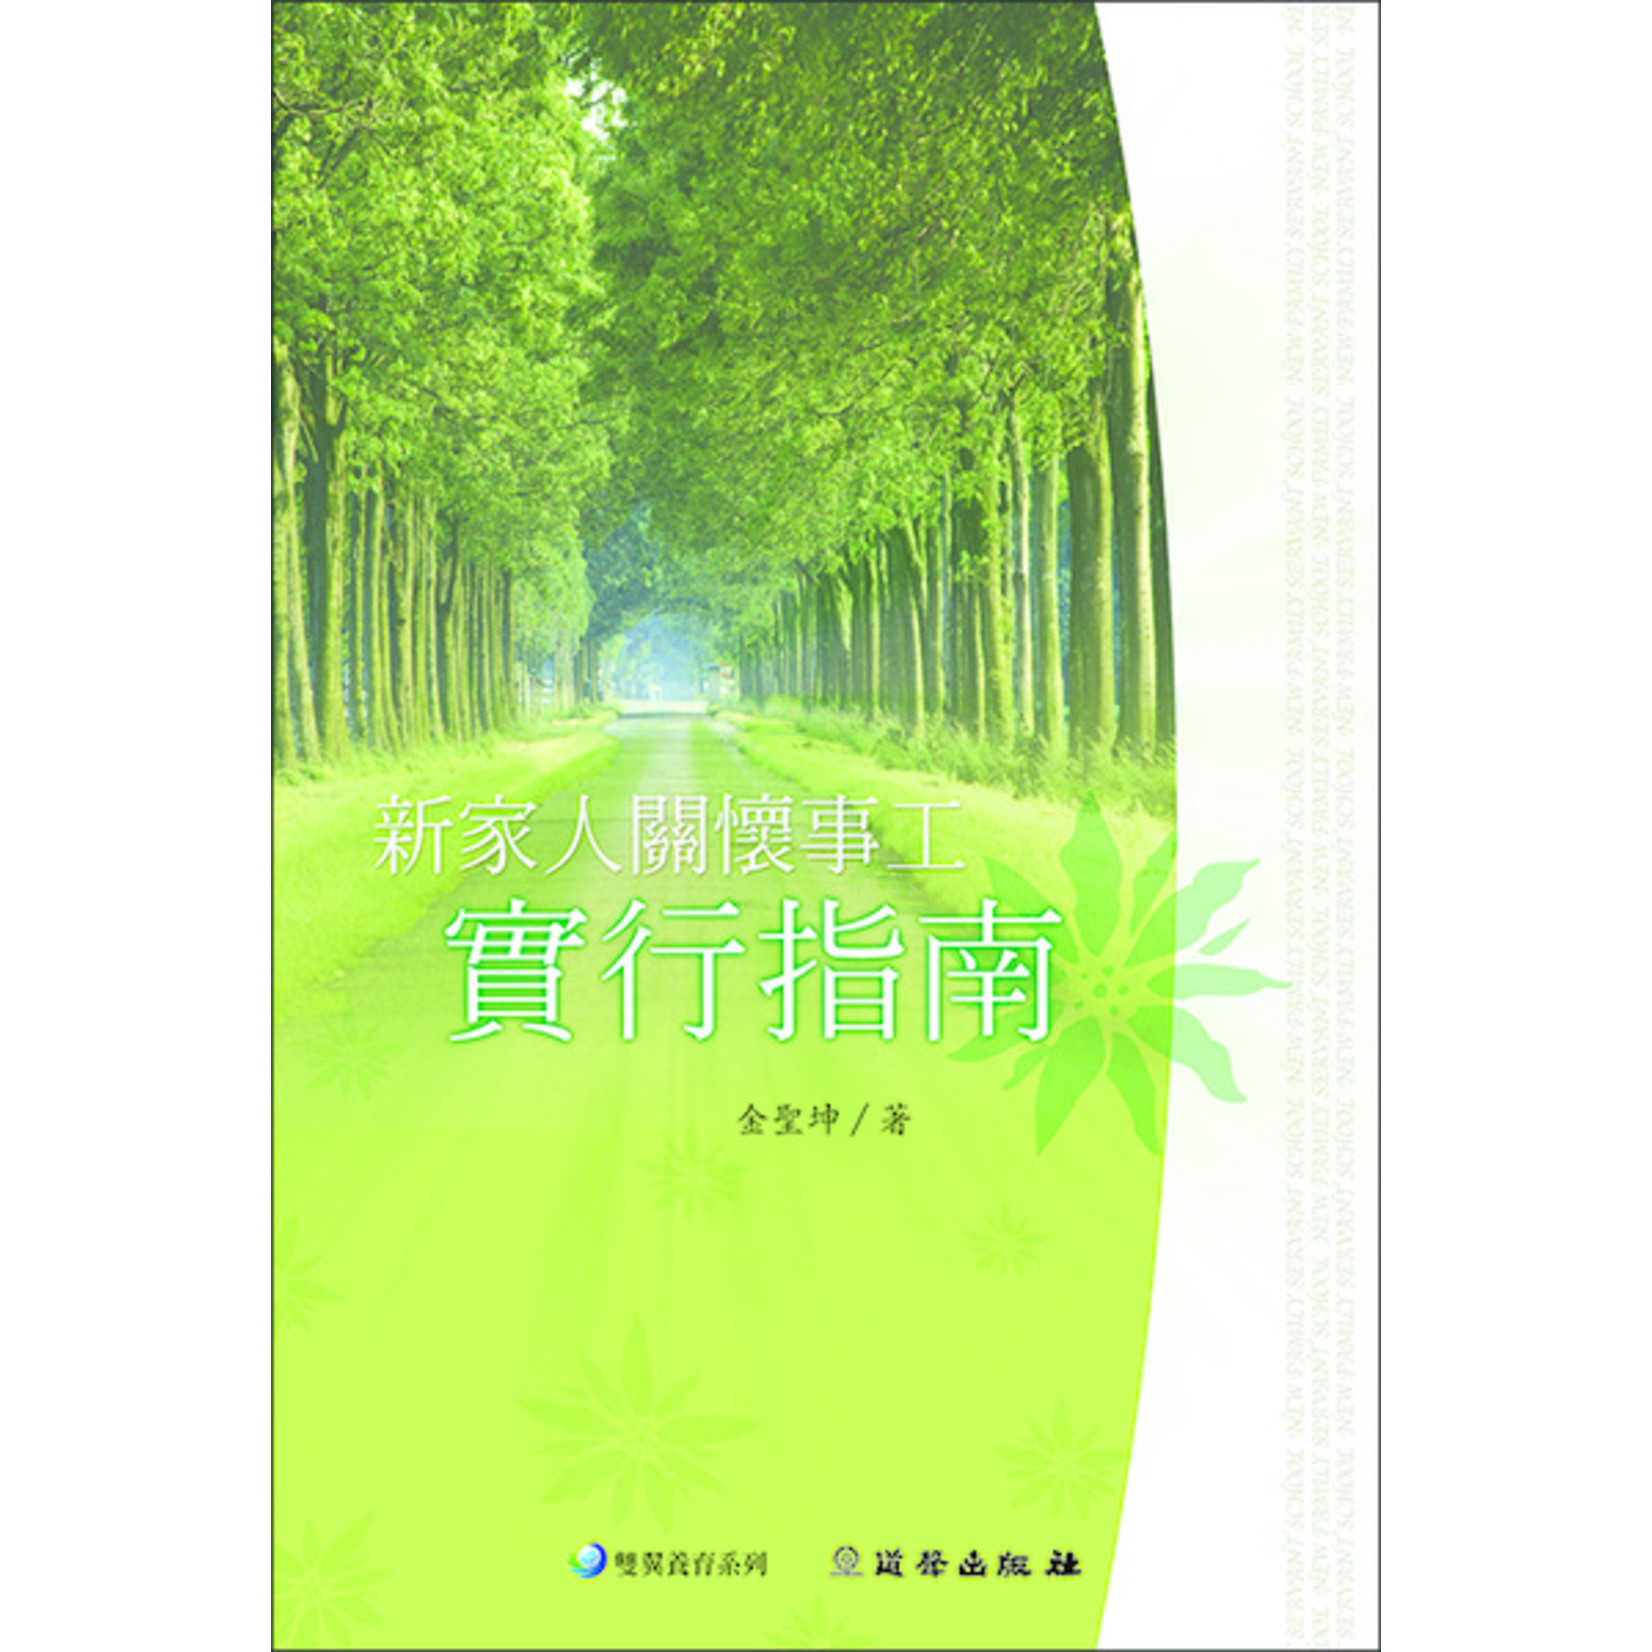 道聲 Taosheng Taiwan 新家人關懷事工實行指南（雙翼養育系列6）A Guide of the New Family Servant Ministry